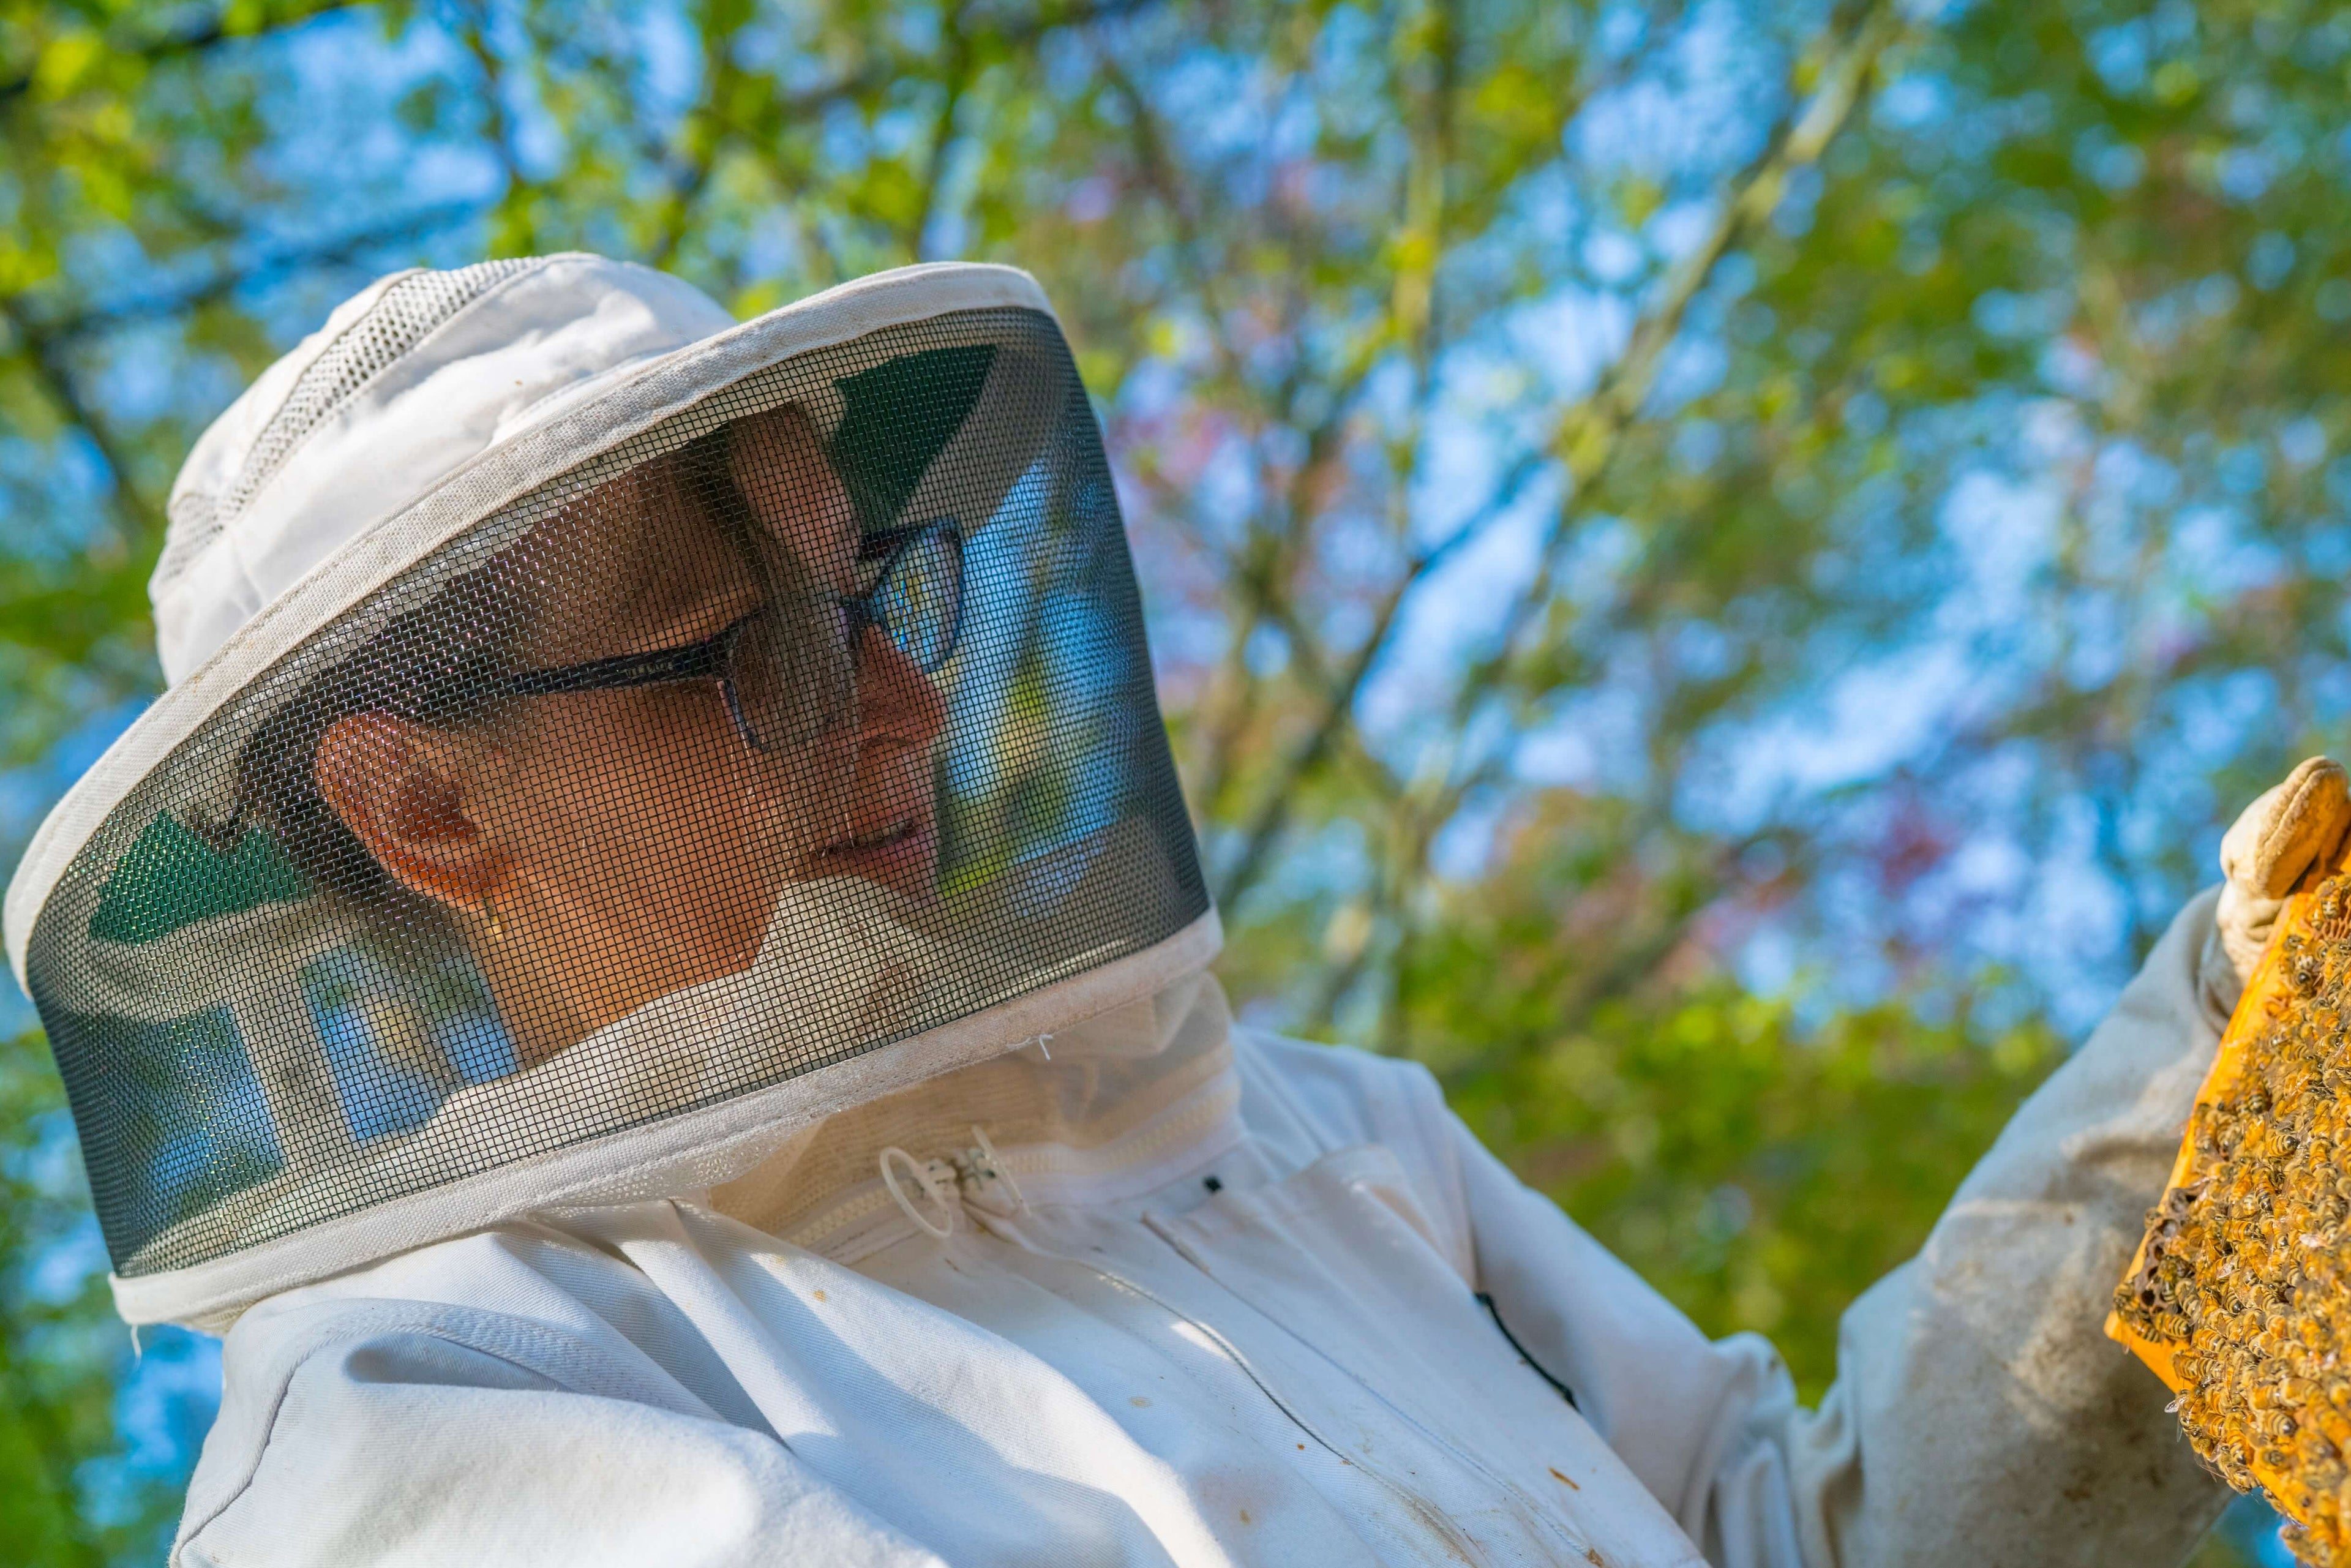 Adriana in her beekeeping suit holding a frame of honeybees.